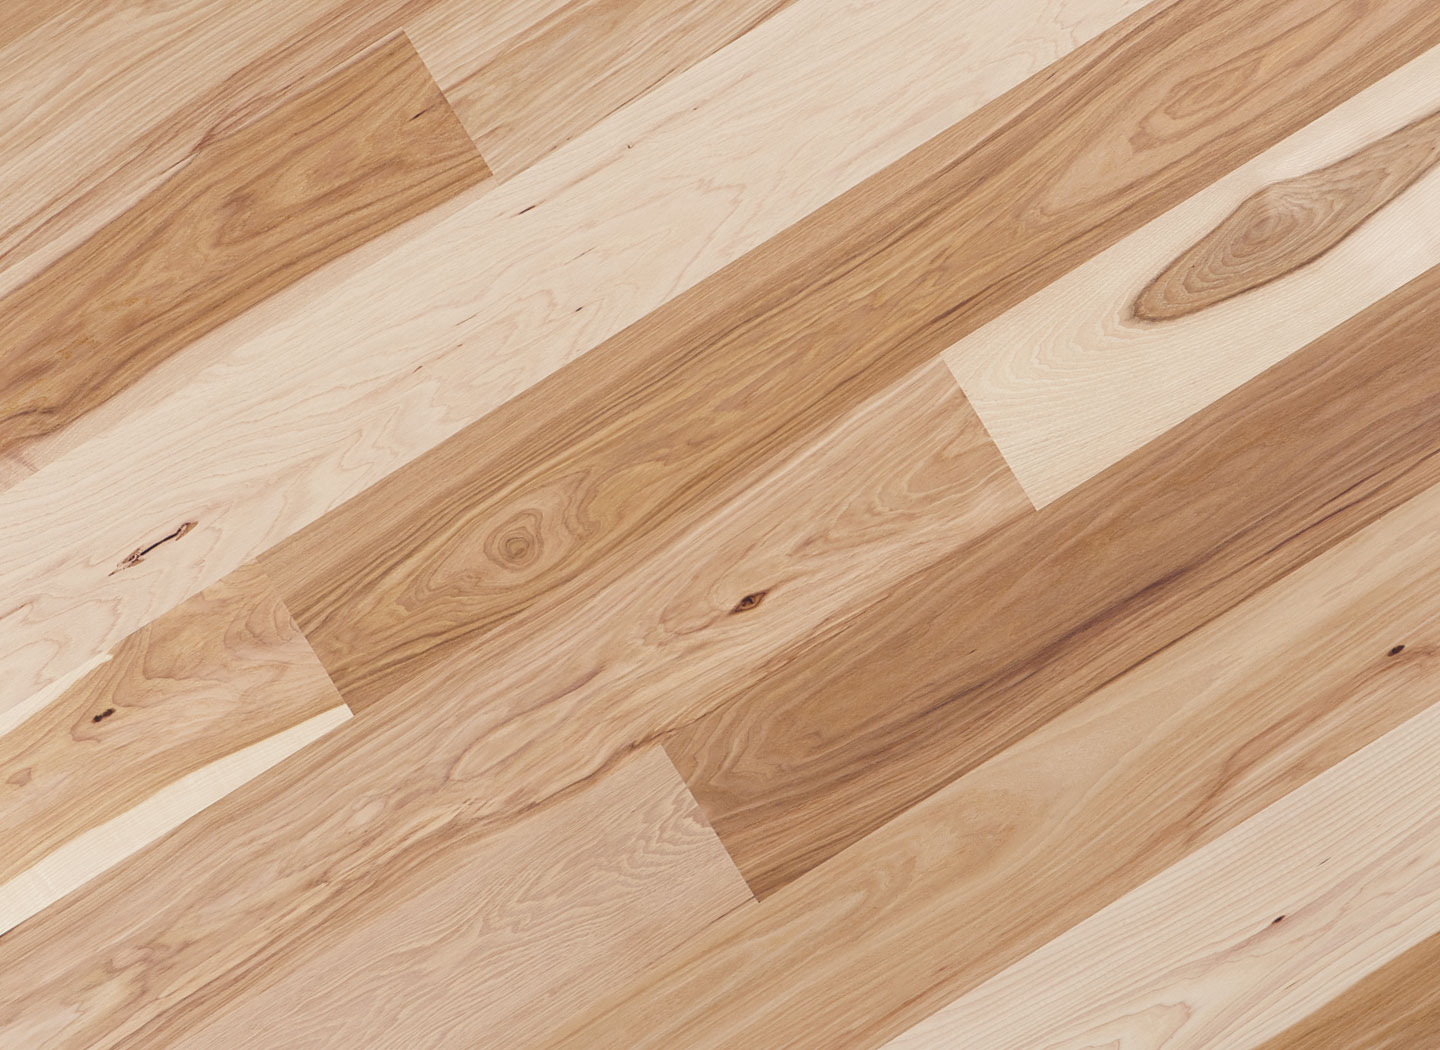 Hickory Pecan Flooring Saroyan Hardwoods, Is Pecan Wood Good For Flooring